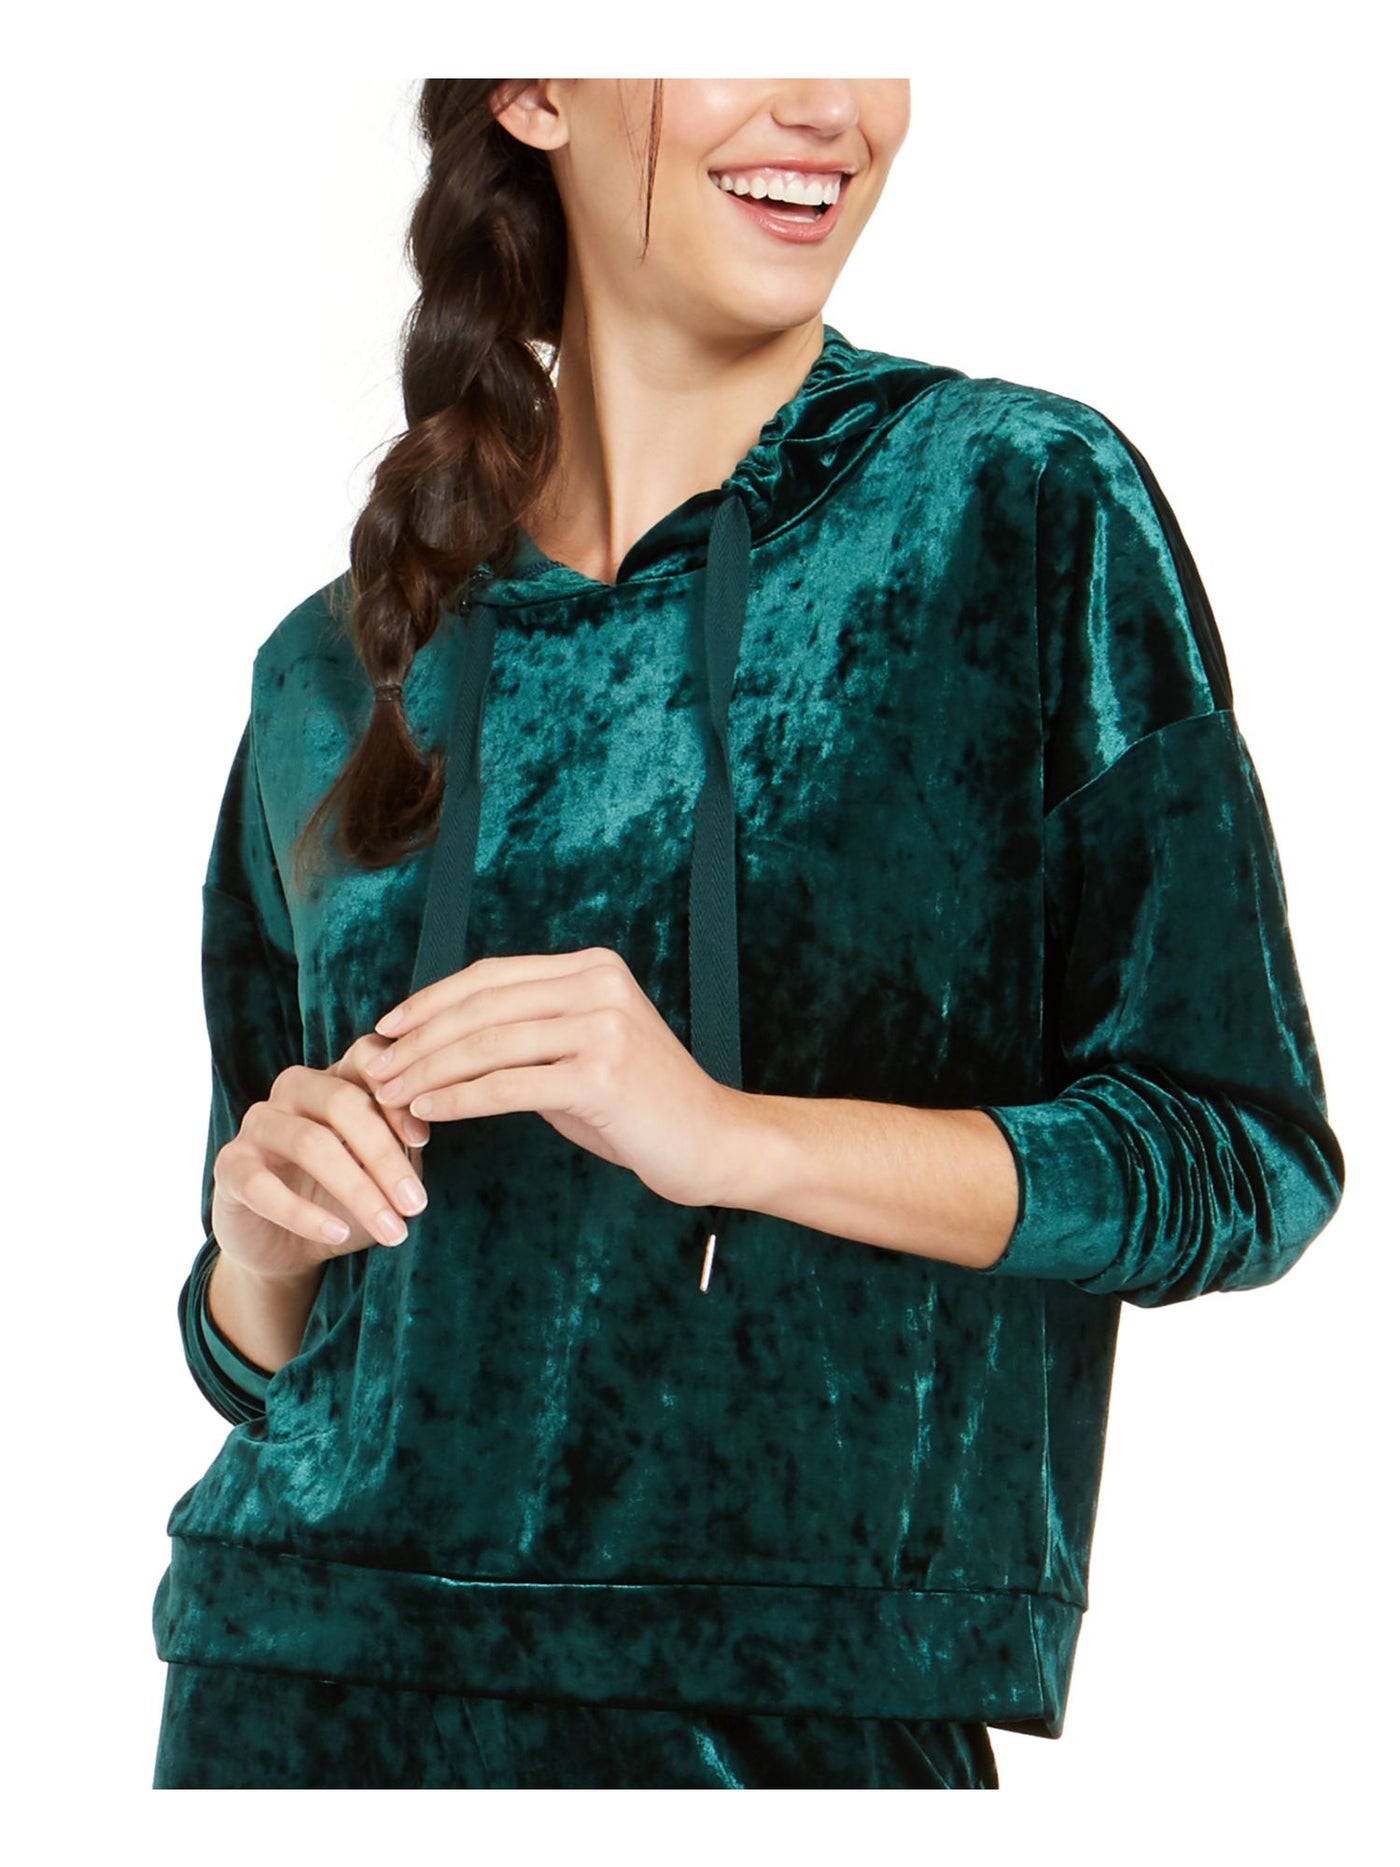 ALFANI INTIMATES Intimates Green velvet Sleepwear Sleep Shirt Pajama Top XXL